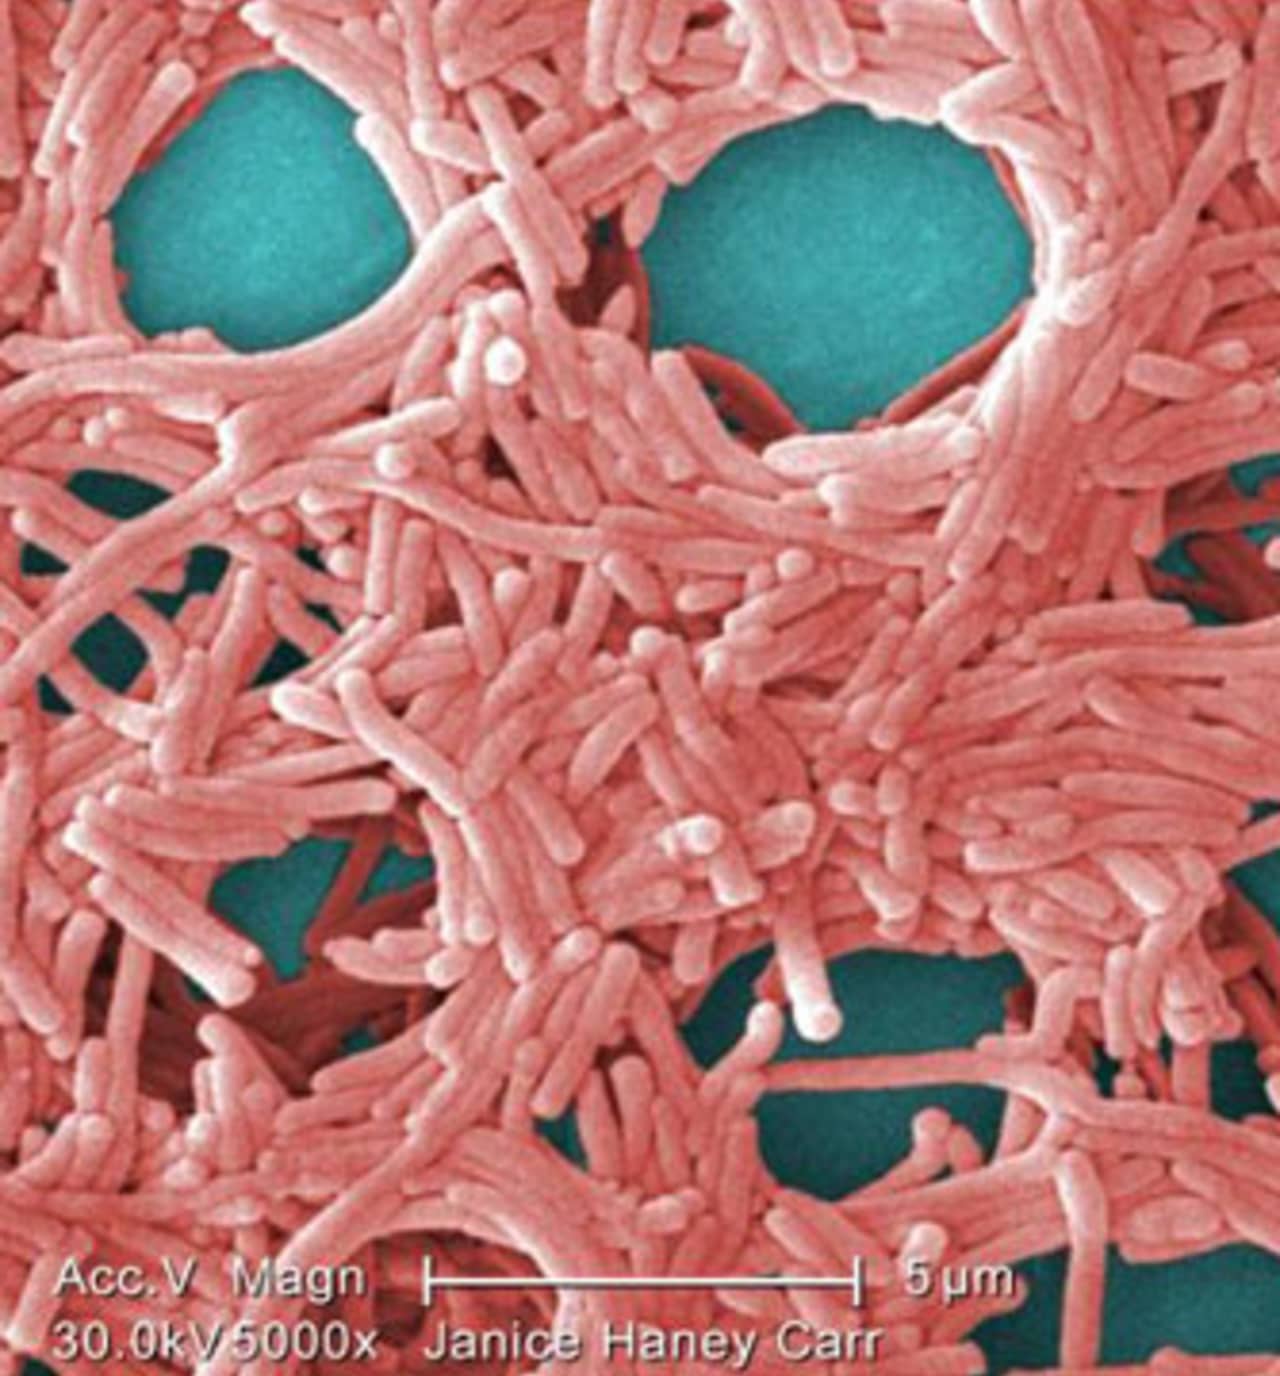 Legionella bacteria is behind the deadly pneumonia-like Legionnaires' disease.